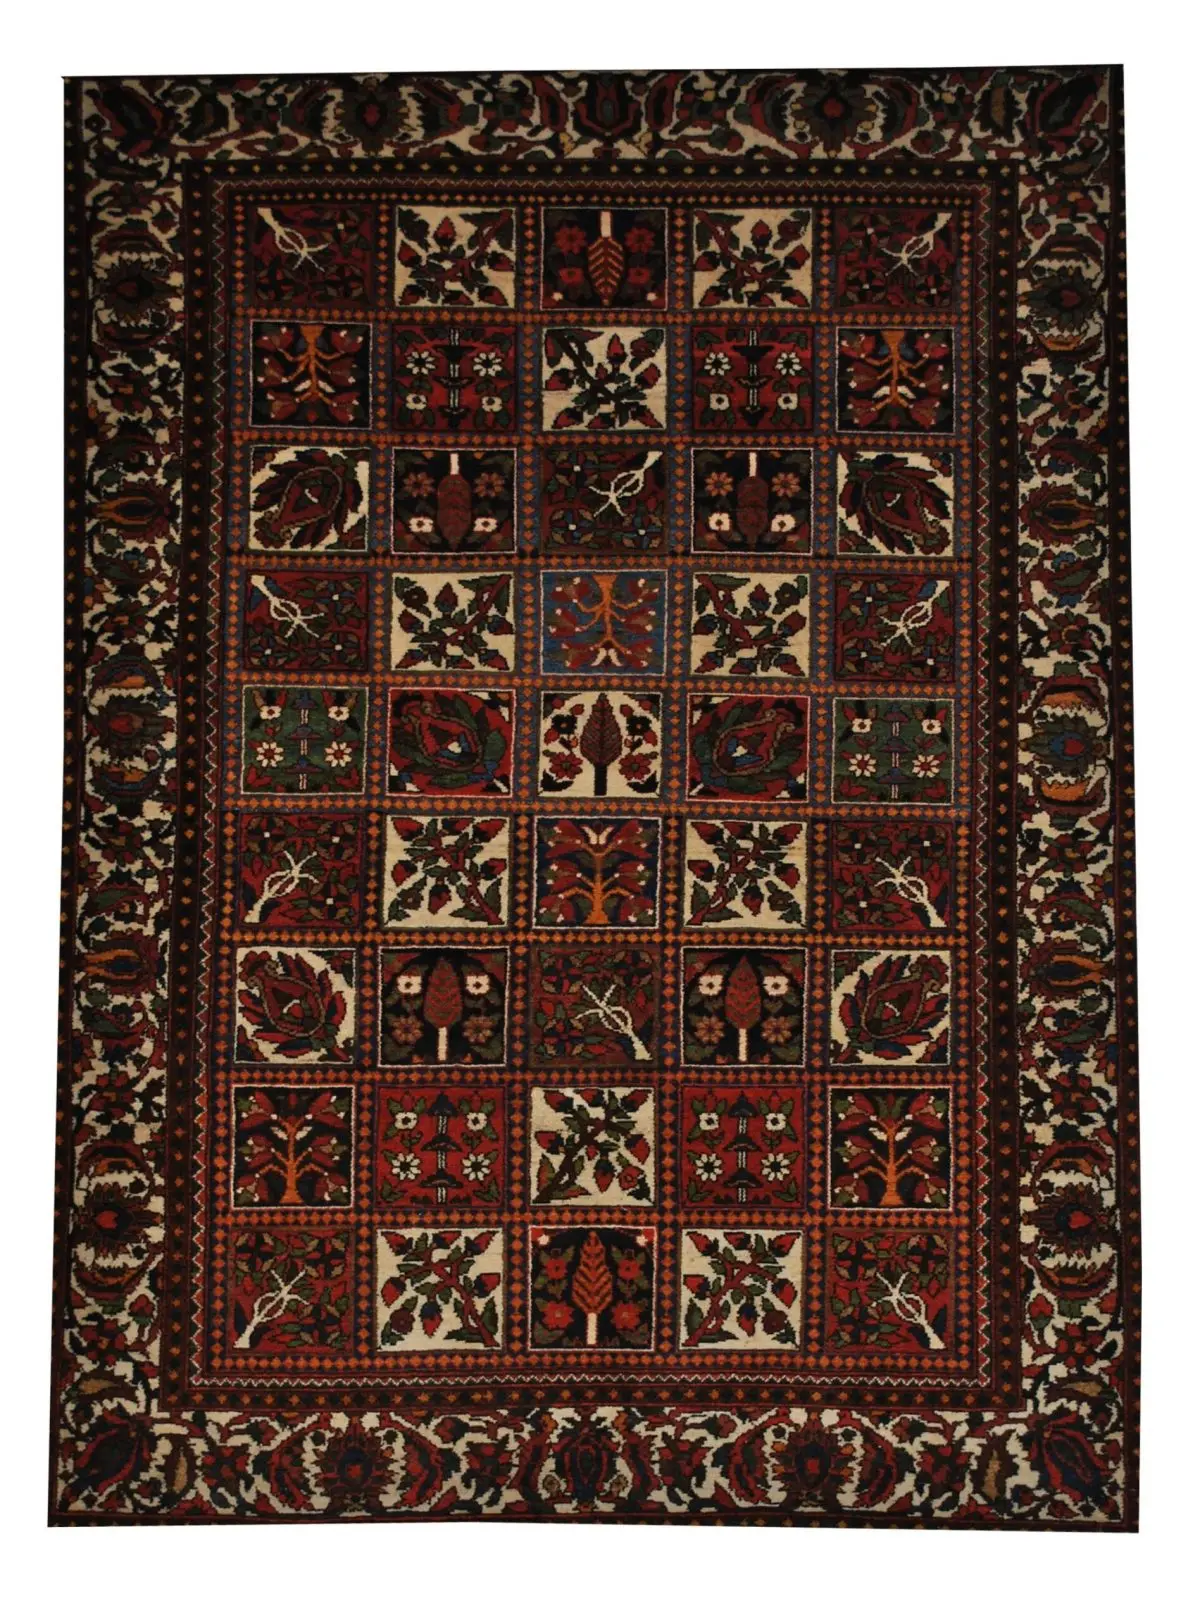 Antique Persian Bakhtiari rug 4' 8" x 6' 10" Handmade Wool Area Rug - Shabahang Royal Carpet